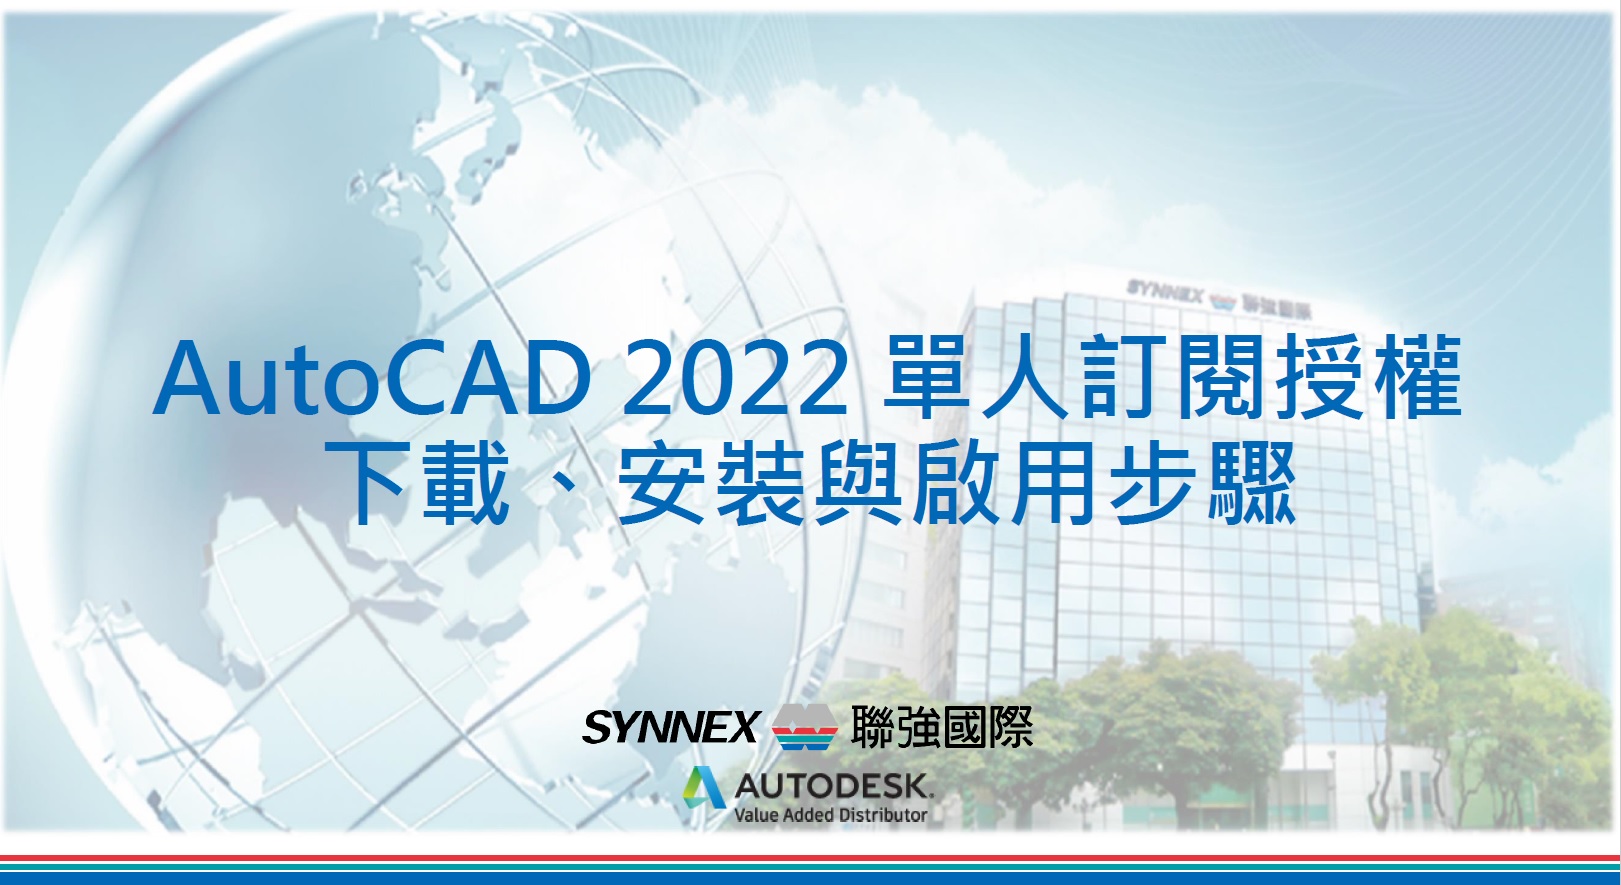 AutoCAD 和 AutoCAD LT 2022  訂閱授權的安裝啟用流程